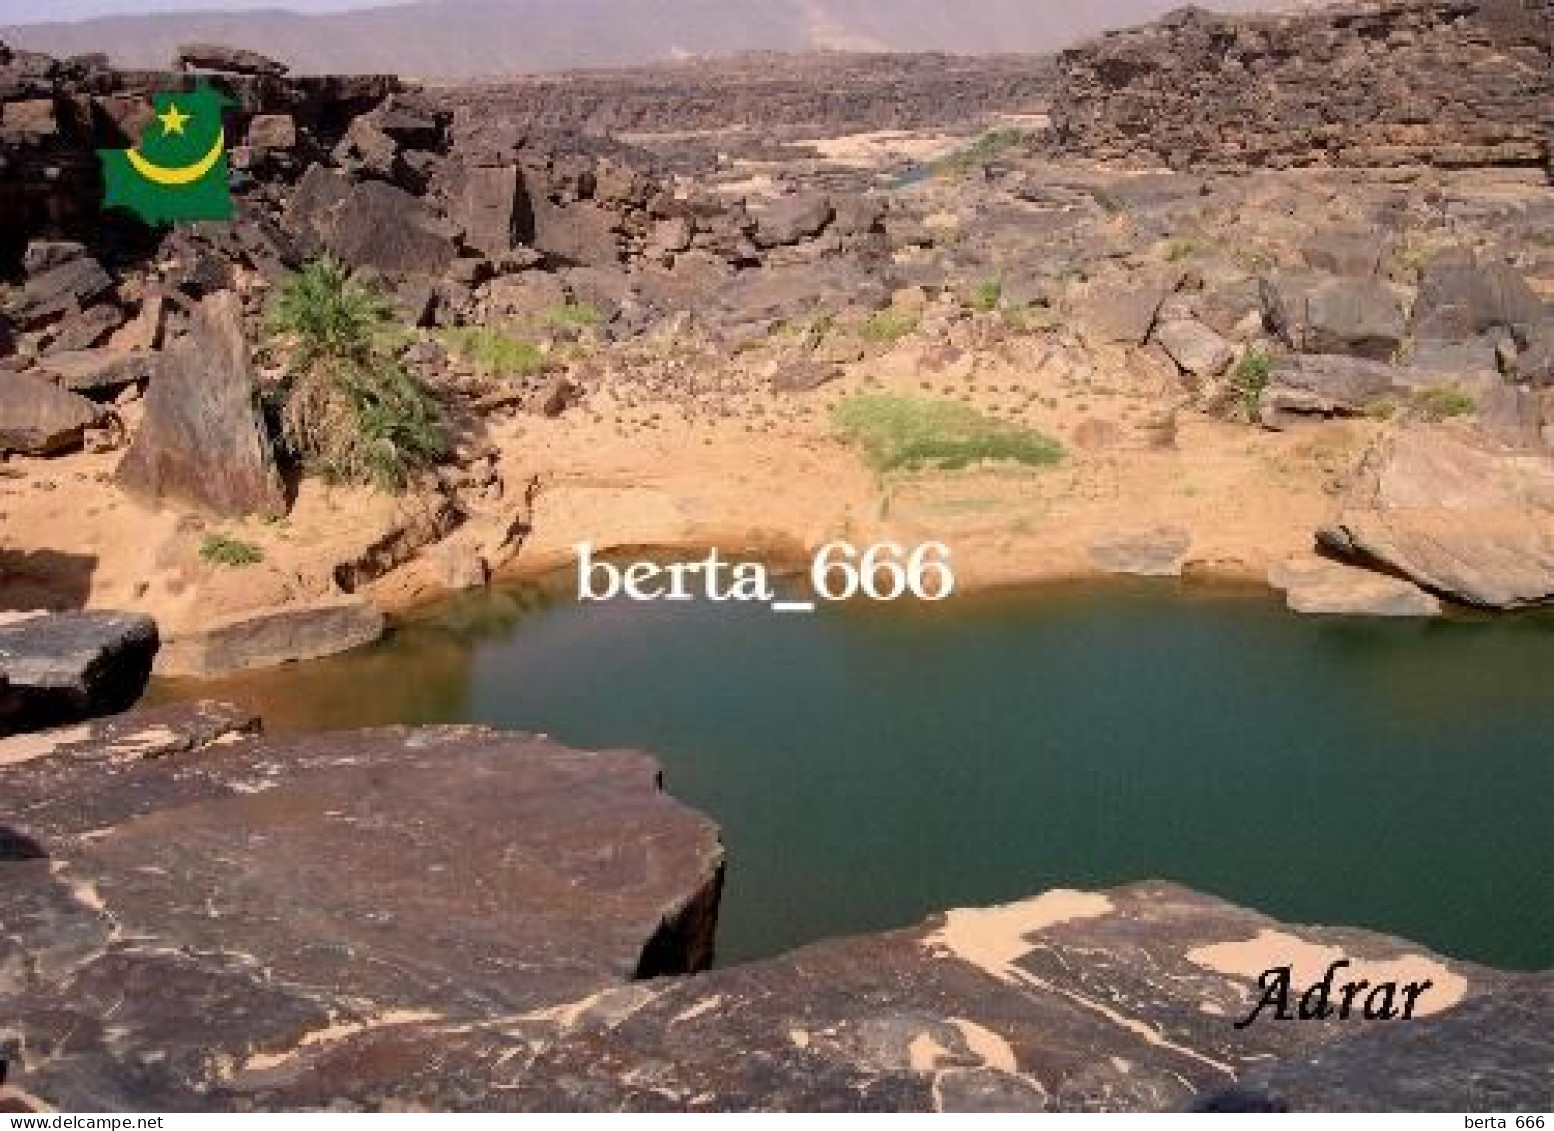 Mauritania Adrar Plateau Landscape New Postcard - Mauritanië